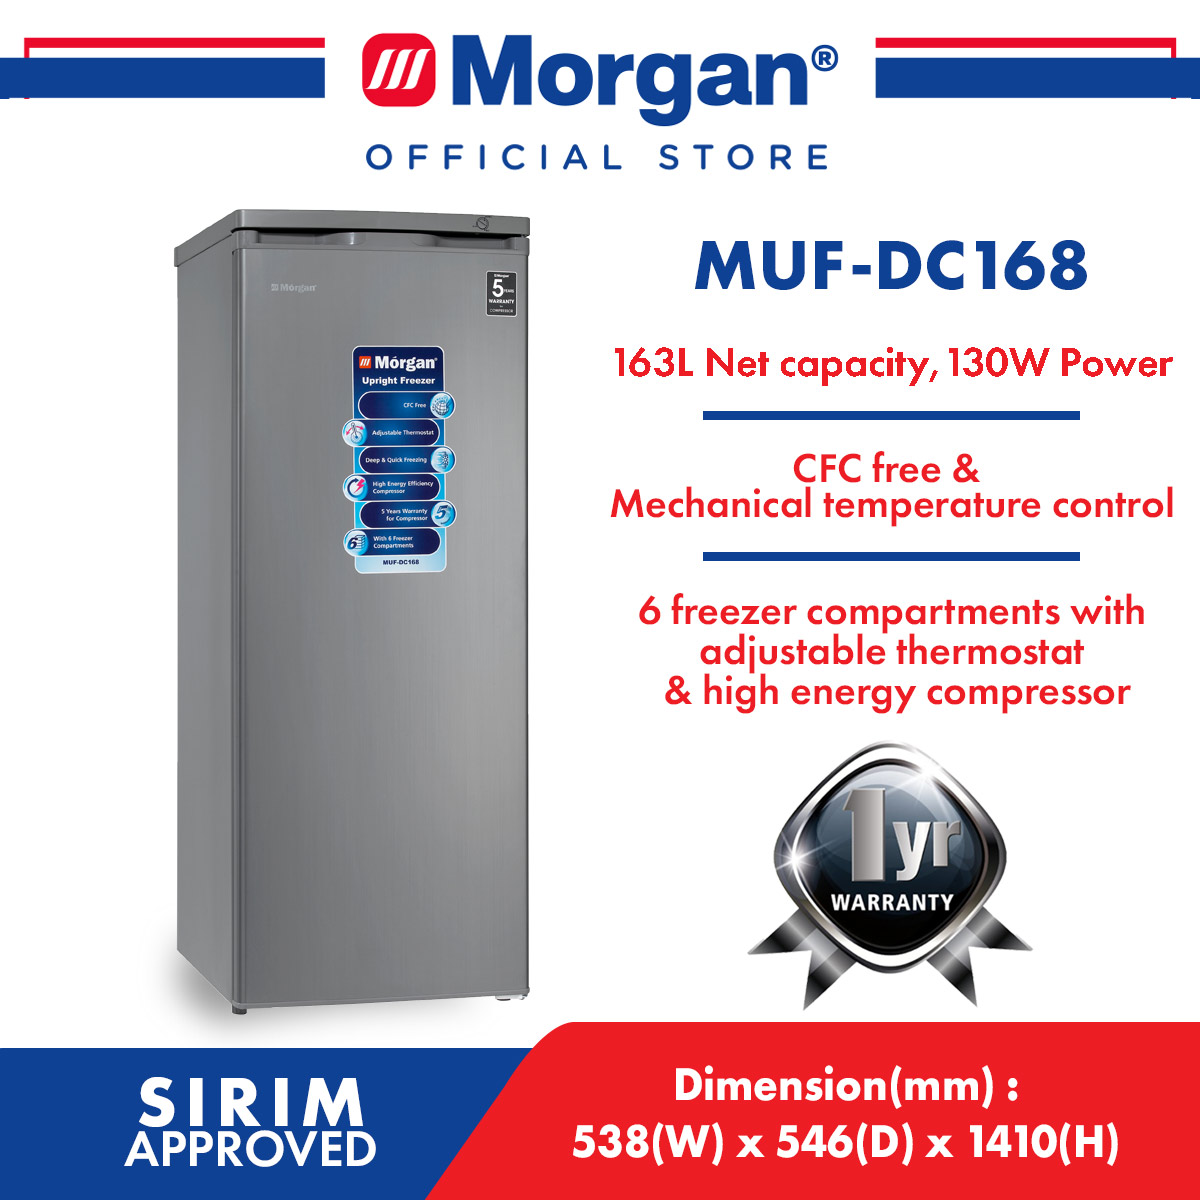 MORGAN MUF-DC168 UPRIGHT FREEZER DIRECT COOL 163L GREY